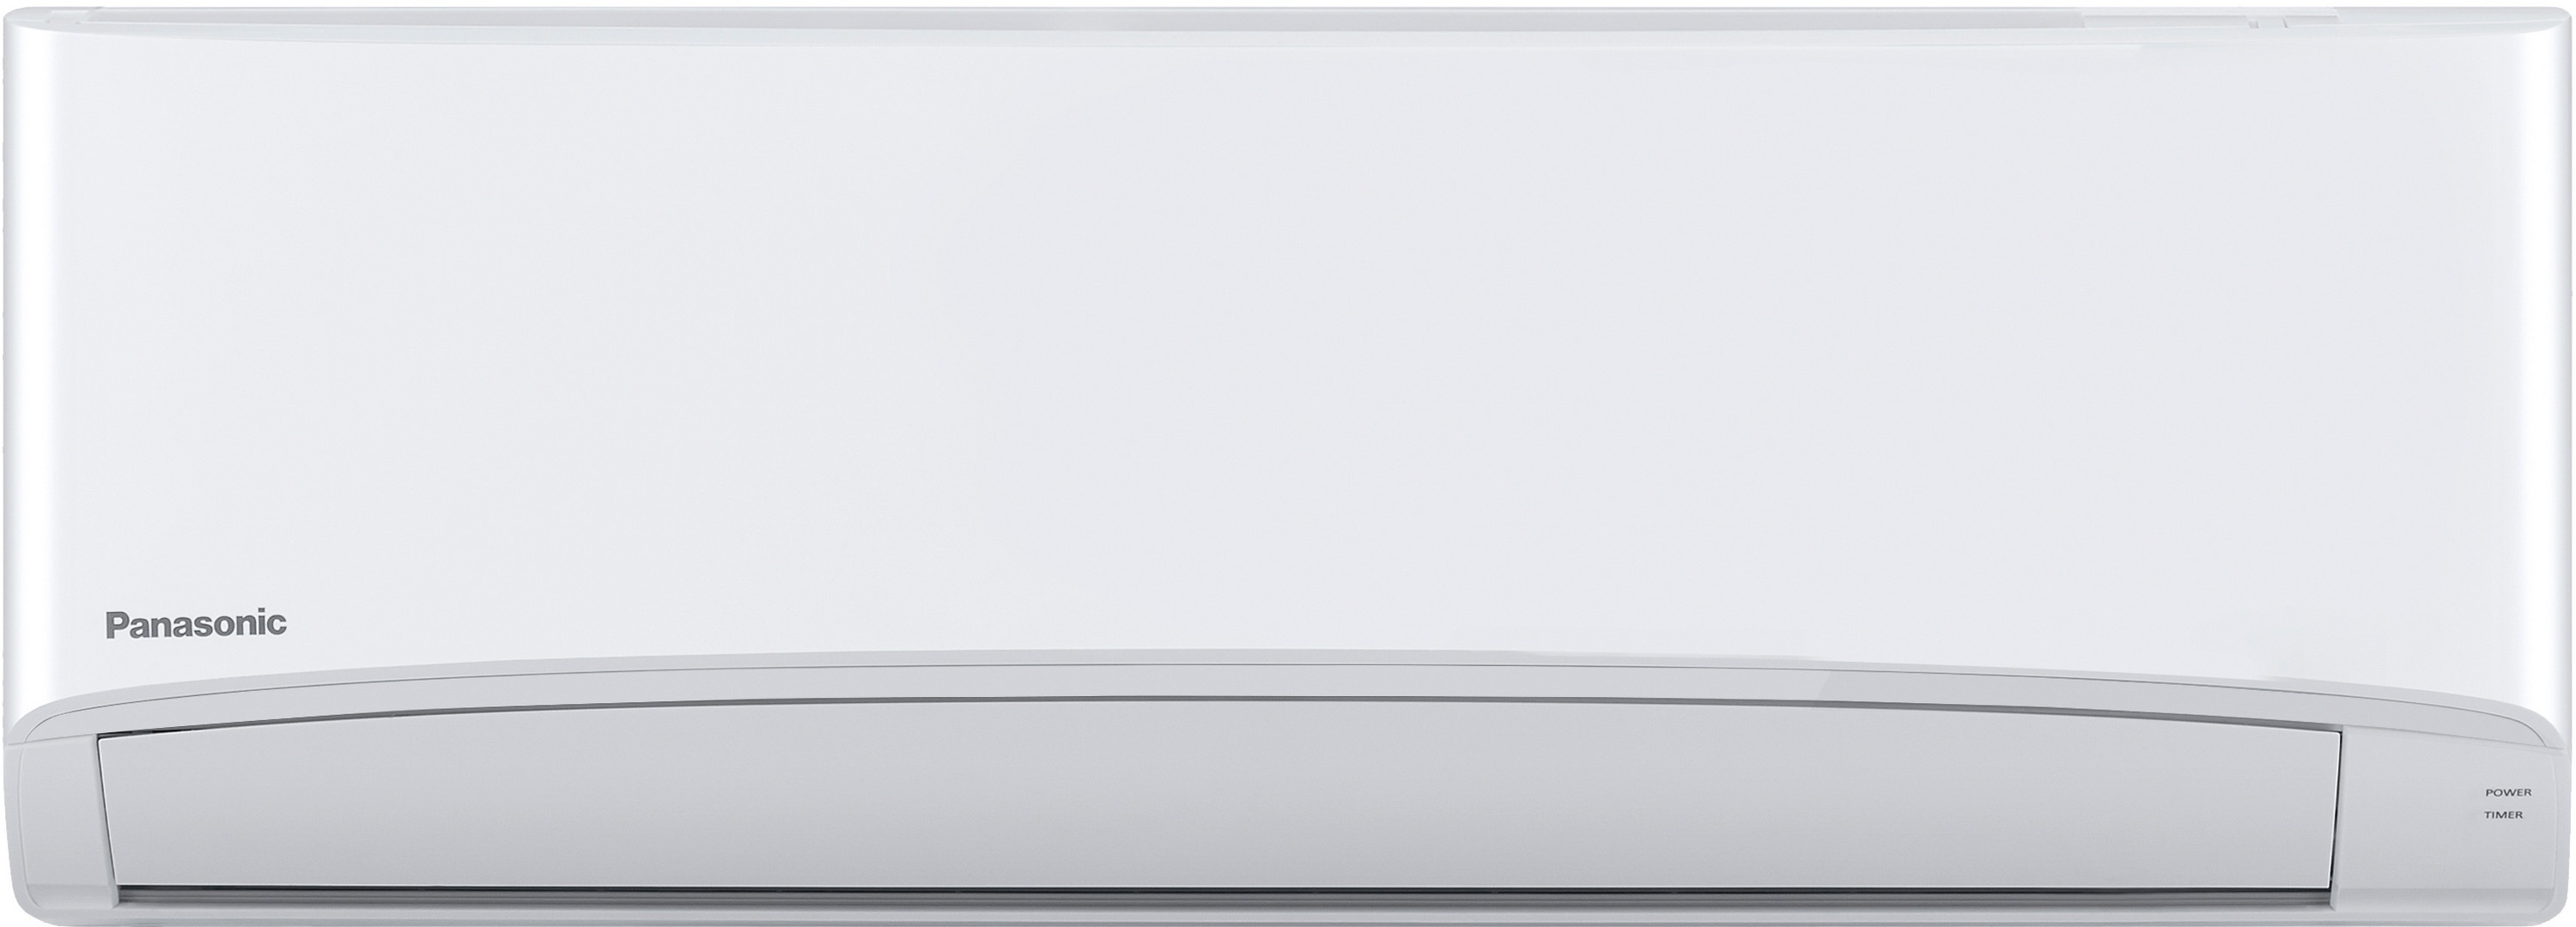 Кондиционер сплит-система Panasonic Compact Inverter CS/CU-TZ71TKEW цена 88999.00 грн - фотография 2